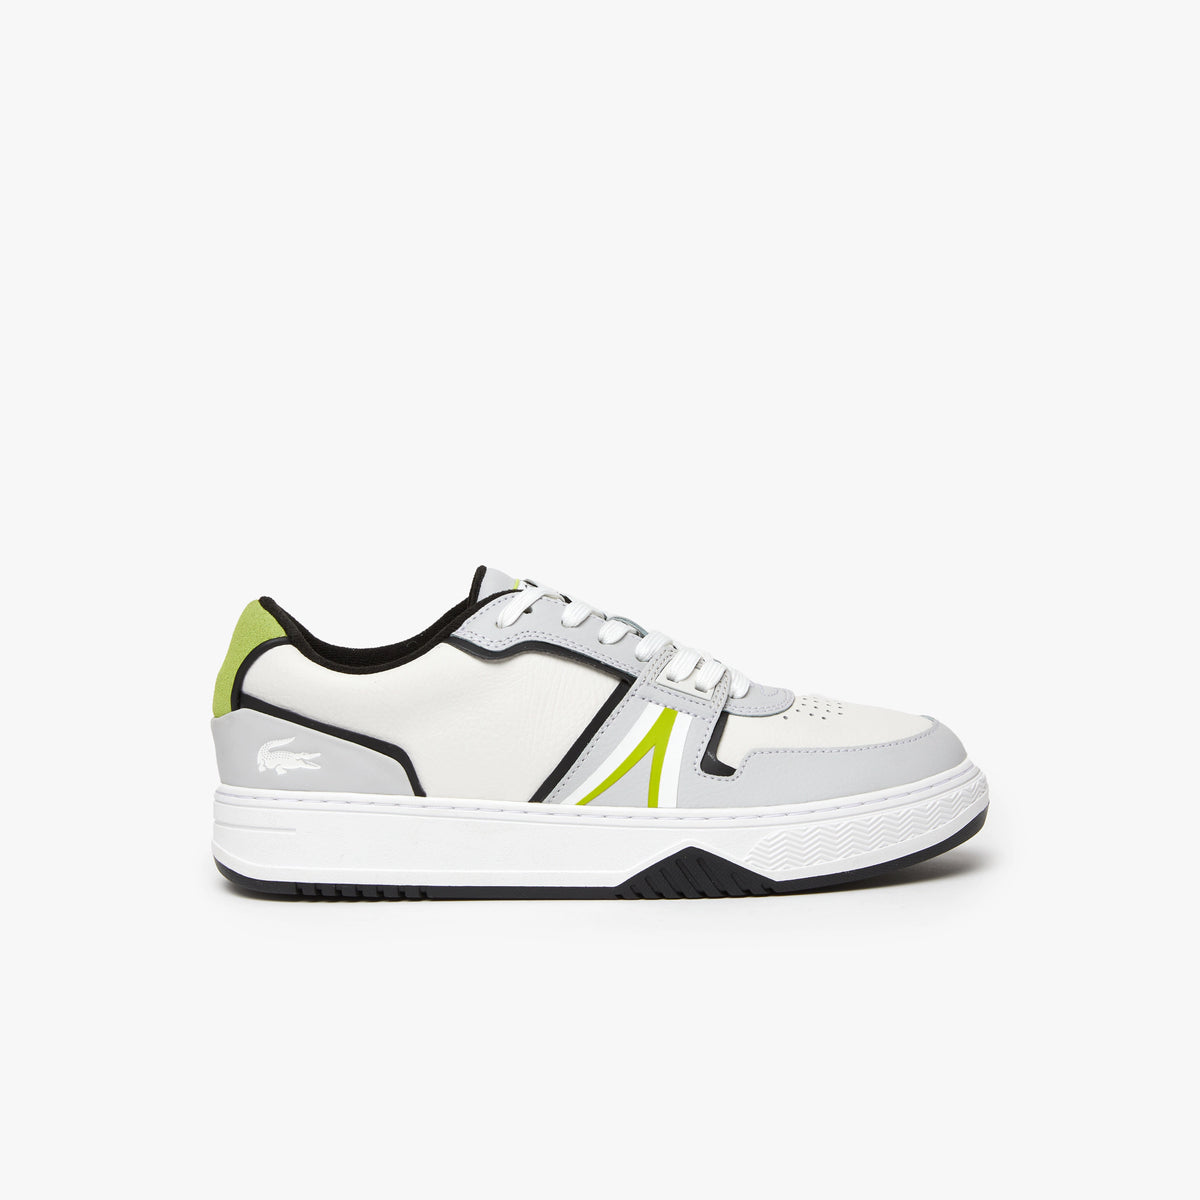 Men's Lacoste L001 Leather Sneakers - Light Grey/White 2Q5